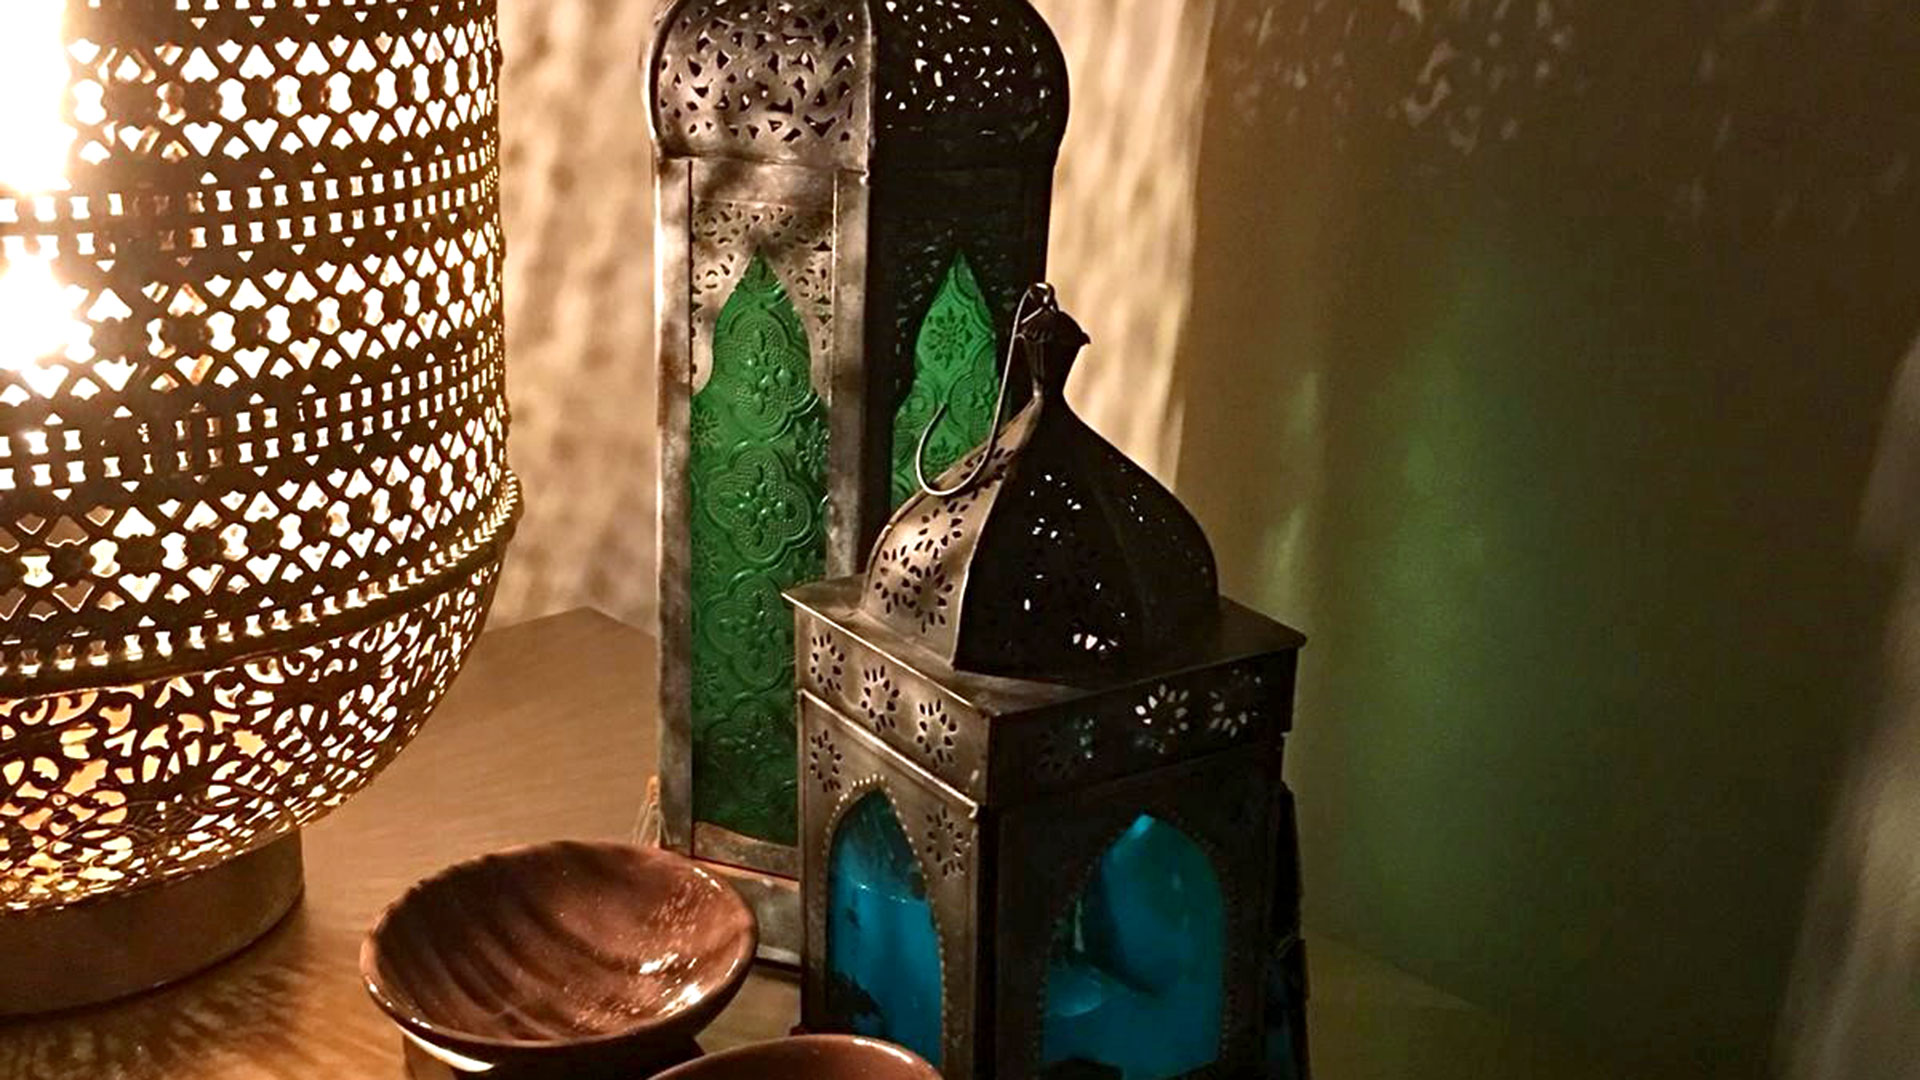 Lantern details in the Bazaar Spa - Shrigley Hall Hotel, Peak District